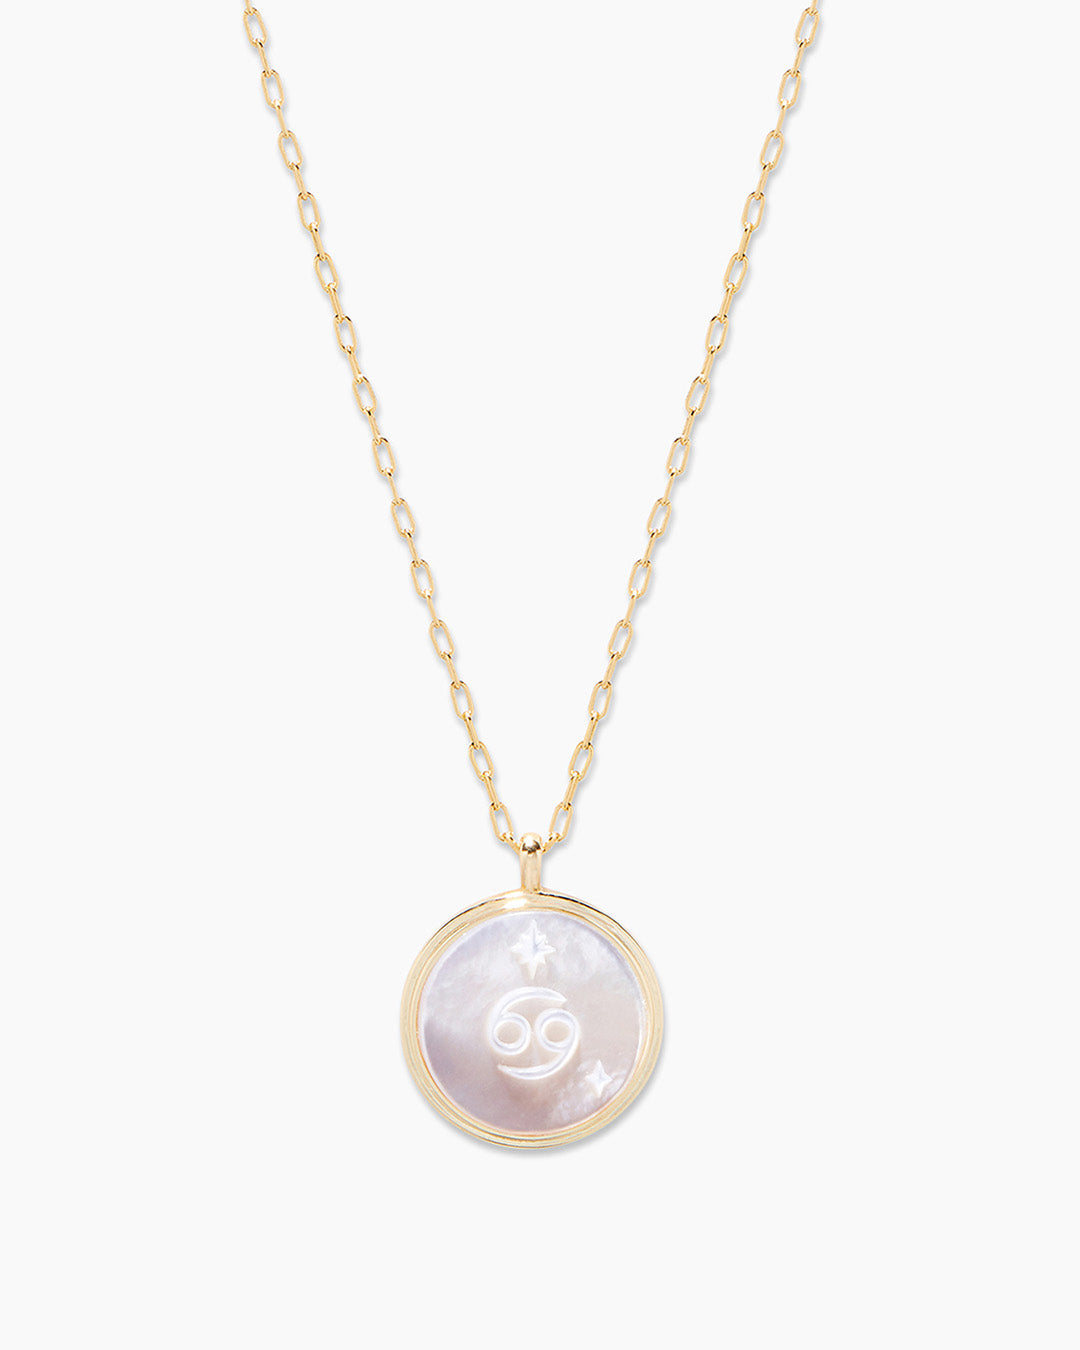 Image of Gorjana Zodiac Cancer sign necklace on a white background